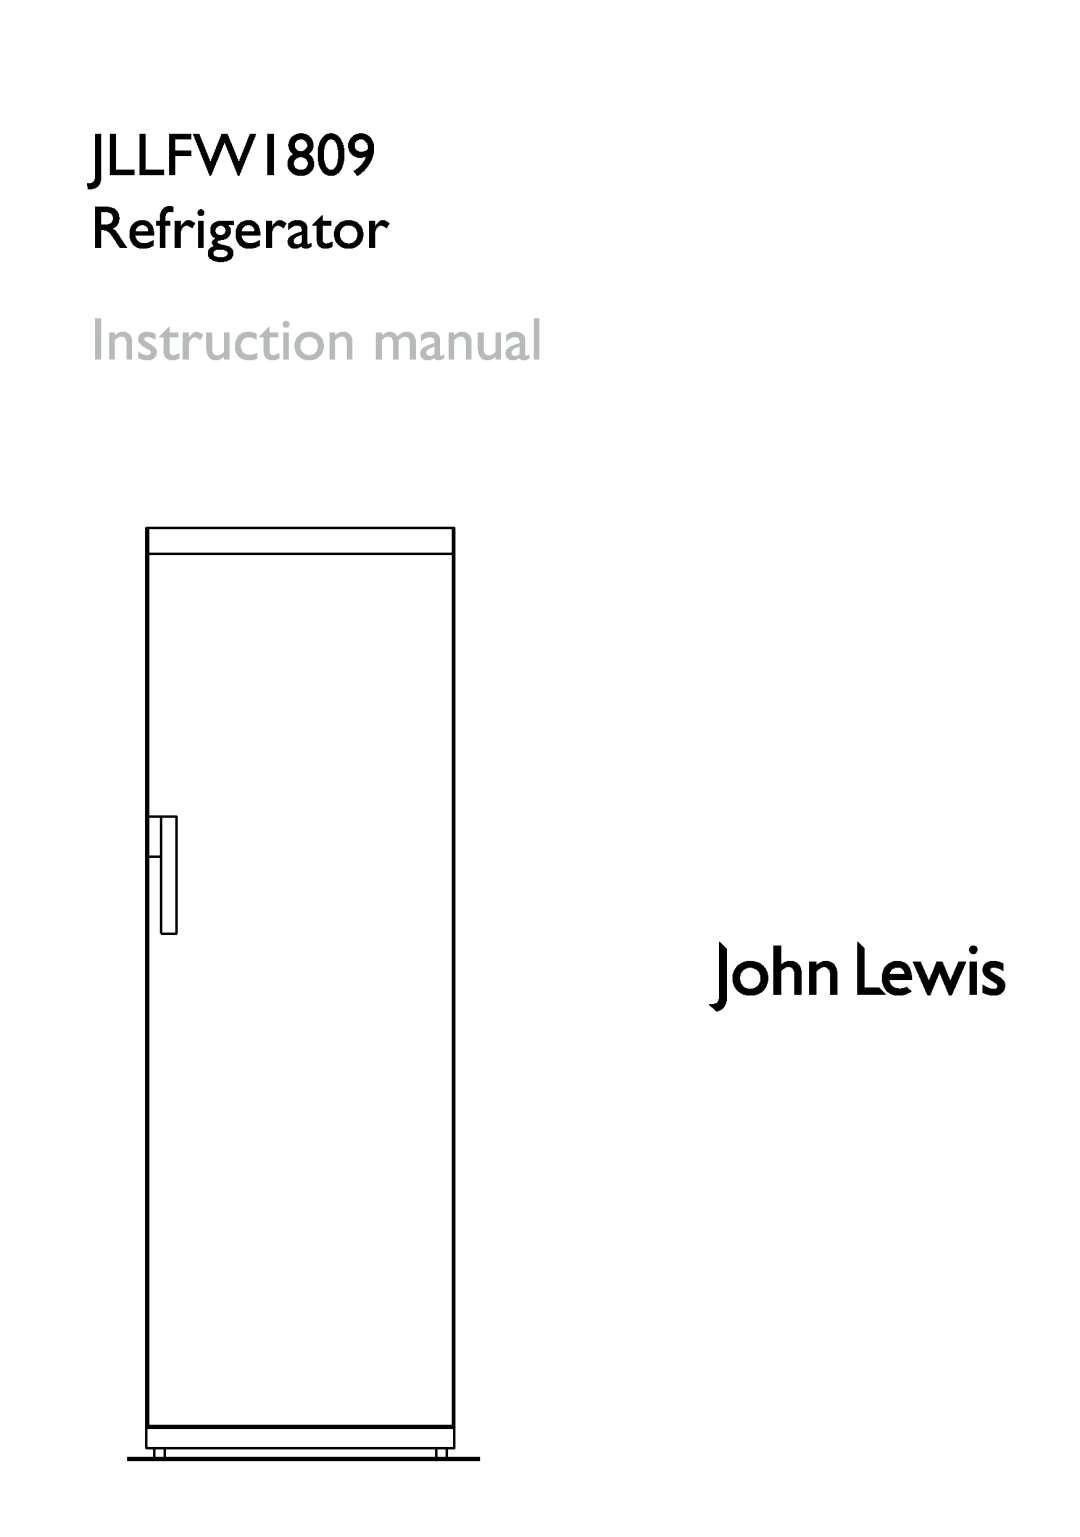 John Lewis instruction manual JLLFW1809 Refrigerator 